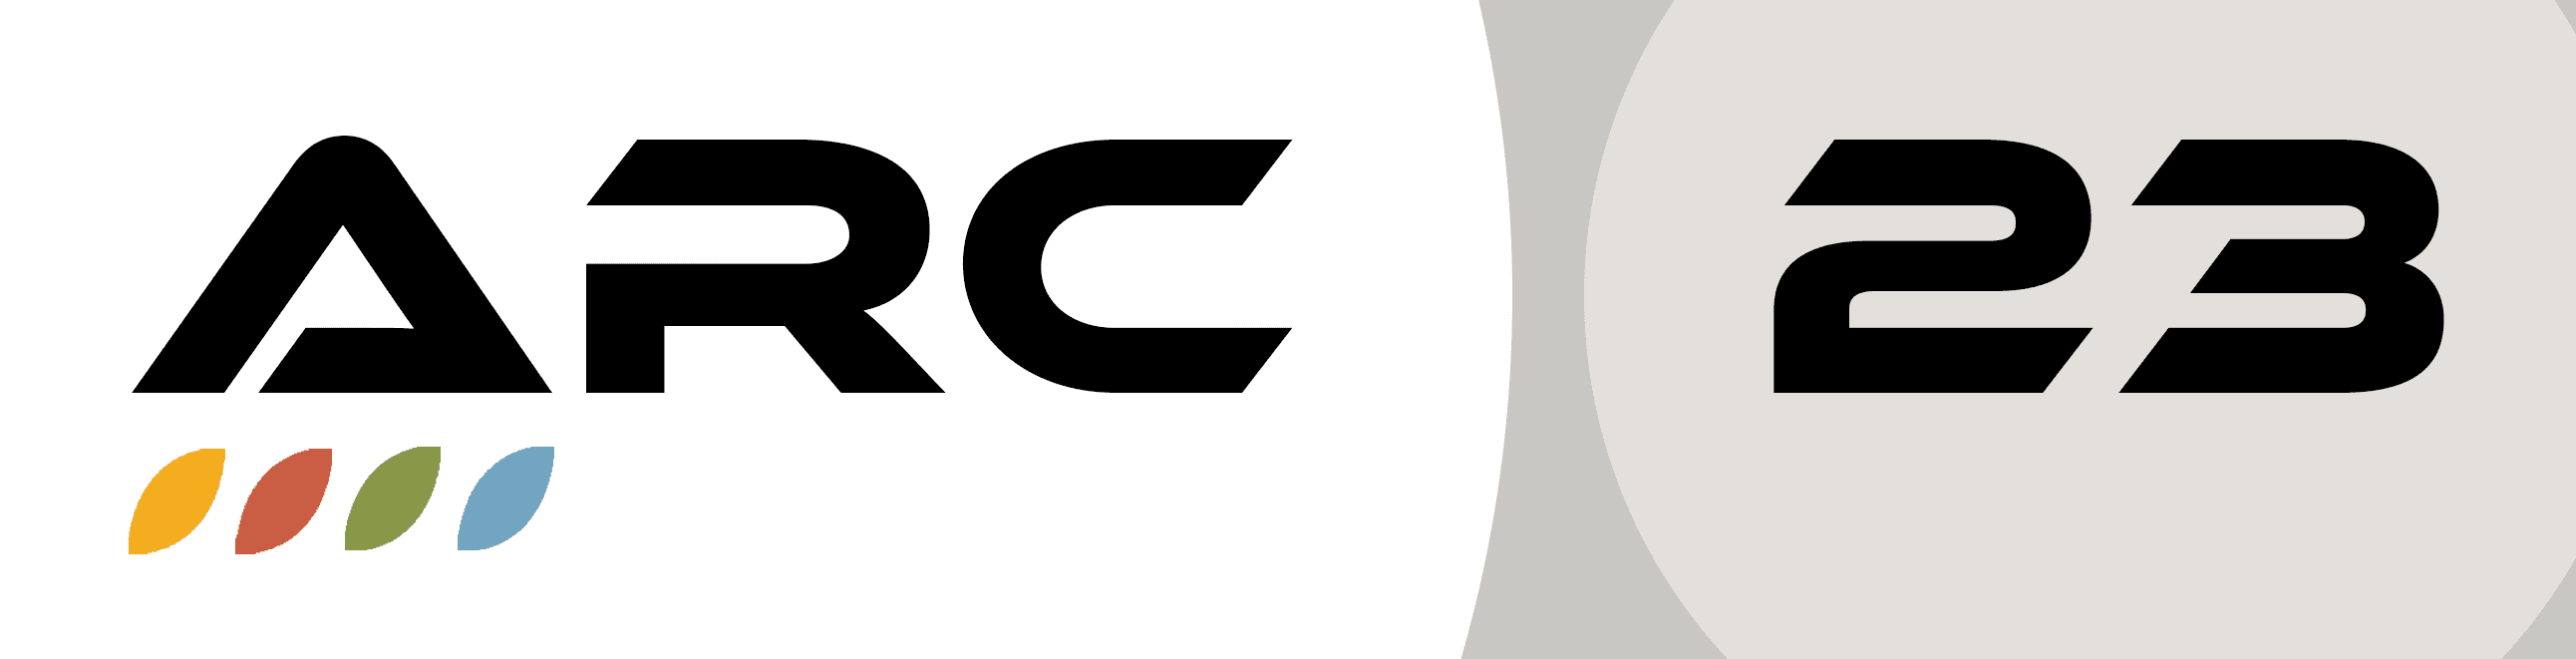 ARC 23 Logo